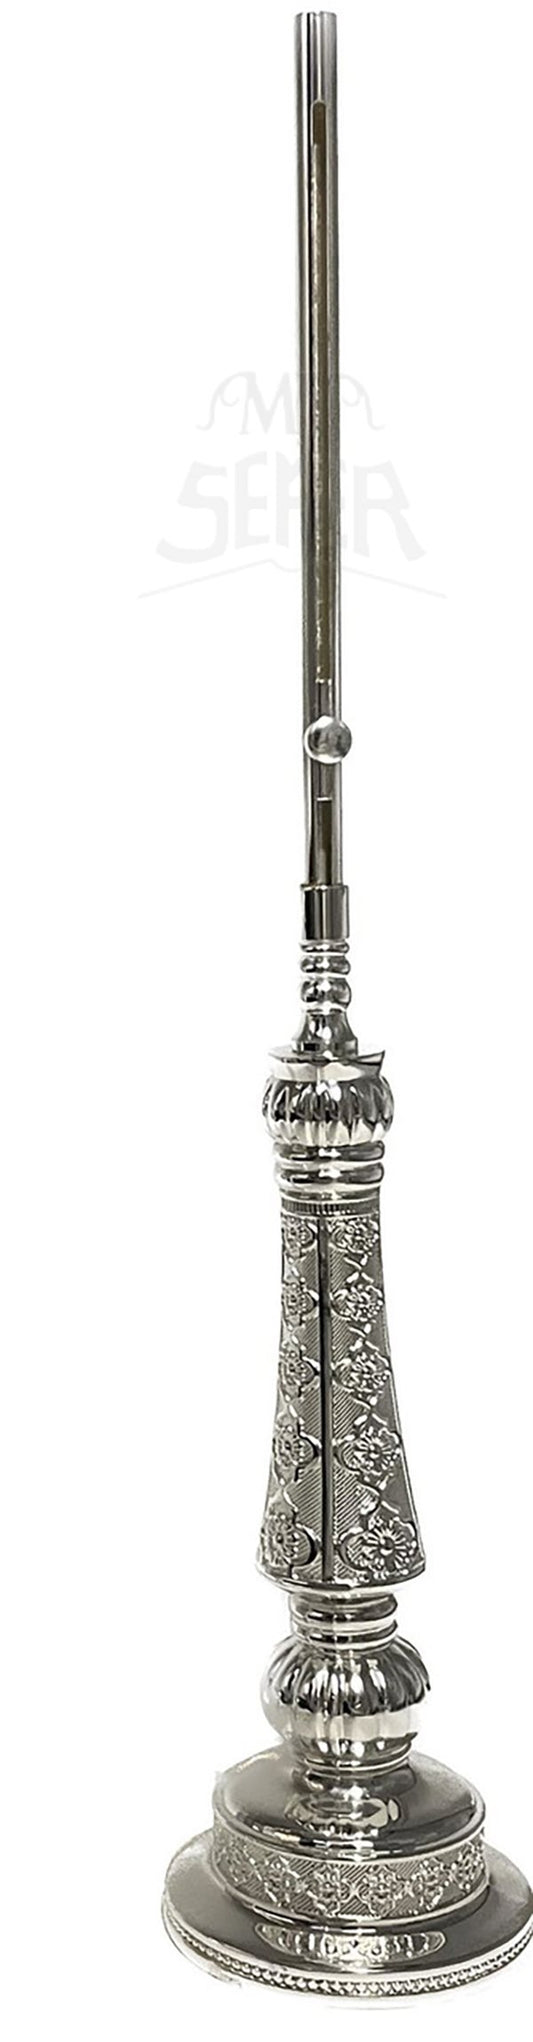 Silverplate Shabbat Candle Lighter Holder-Flower Design 16.5"